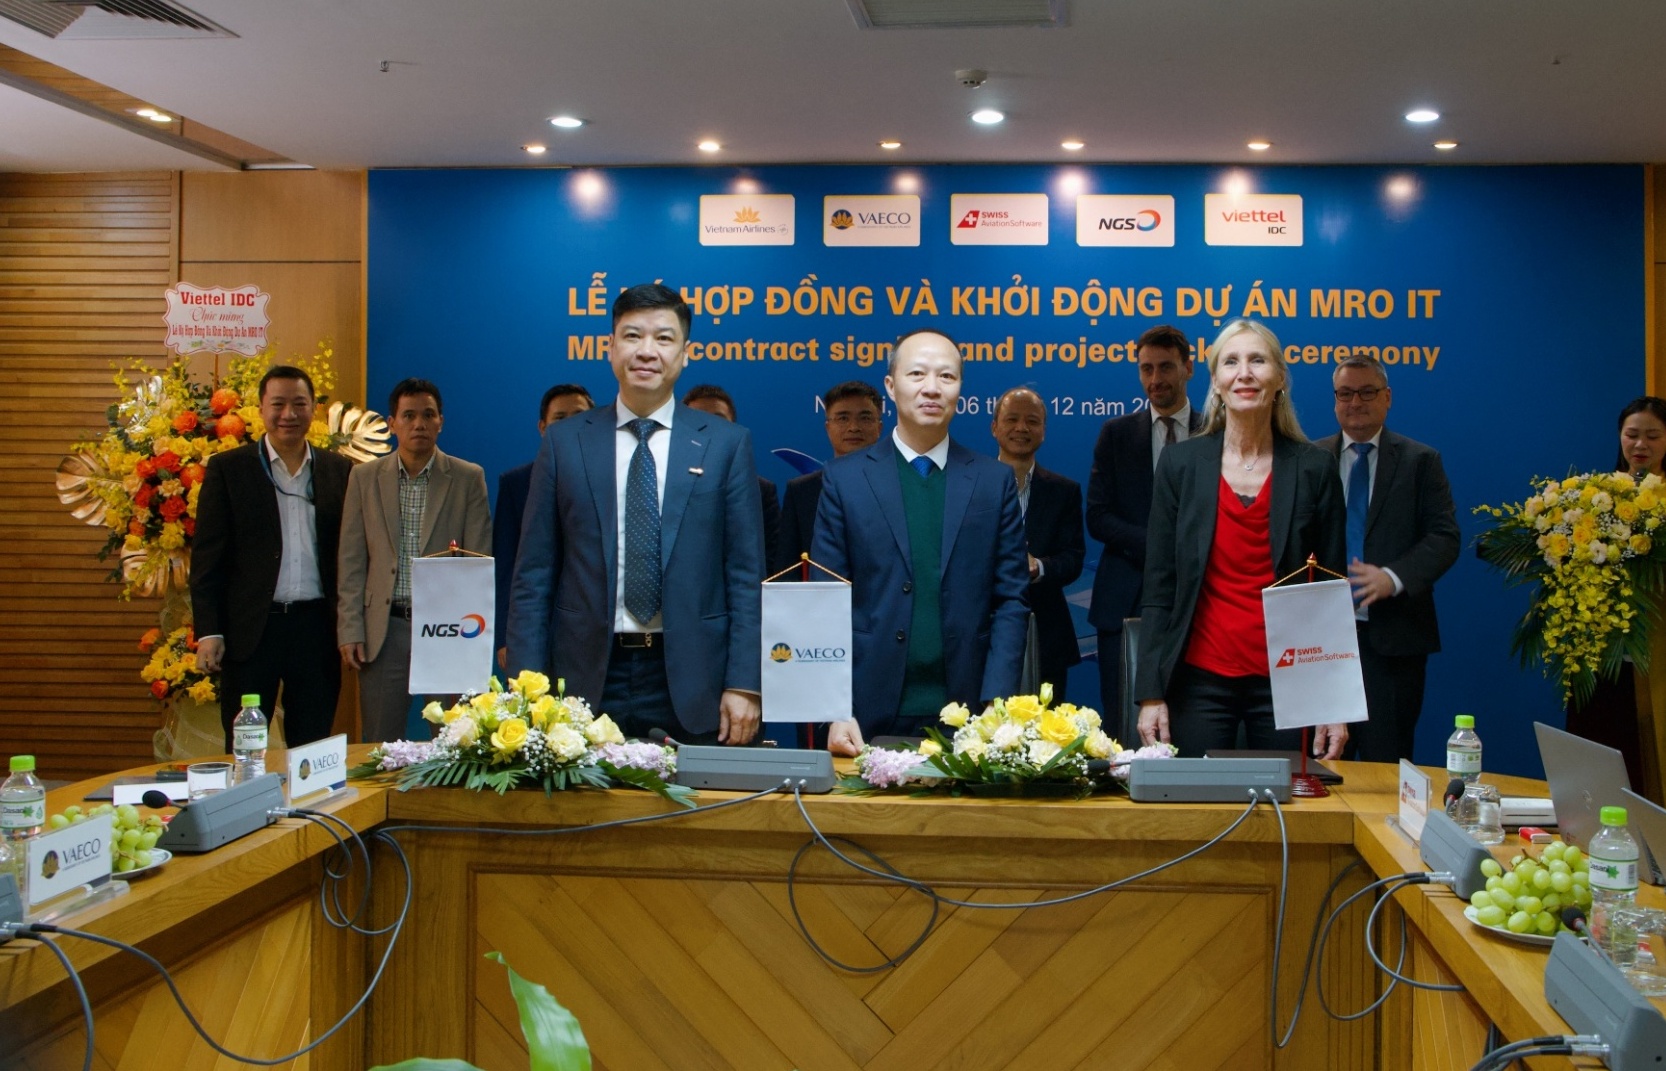 Vietnam Airlines focuses on digital transformation